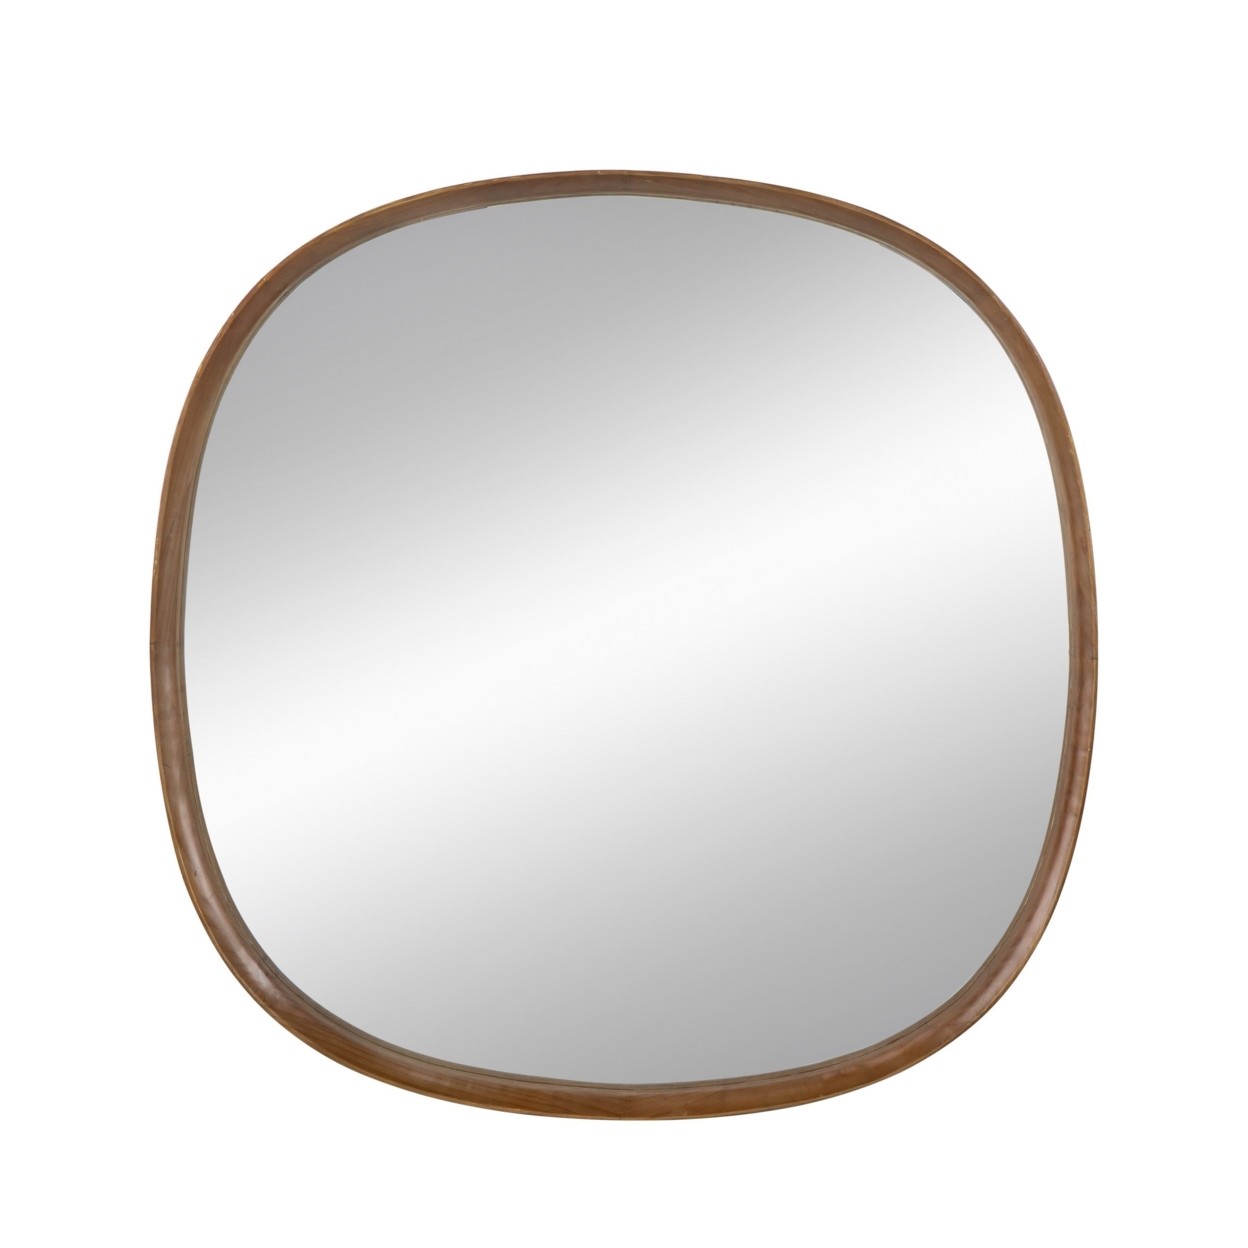 Roe 43 Inch Modern Round Wall Hung Accent Mirror, Brown Pine Wood Frame- Saltoro Sherpi